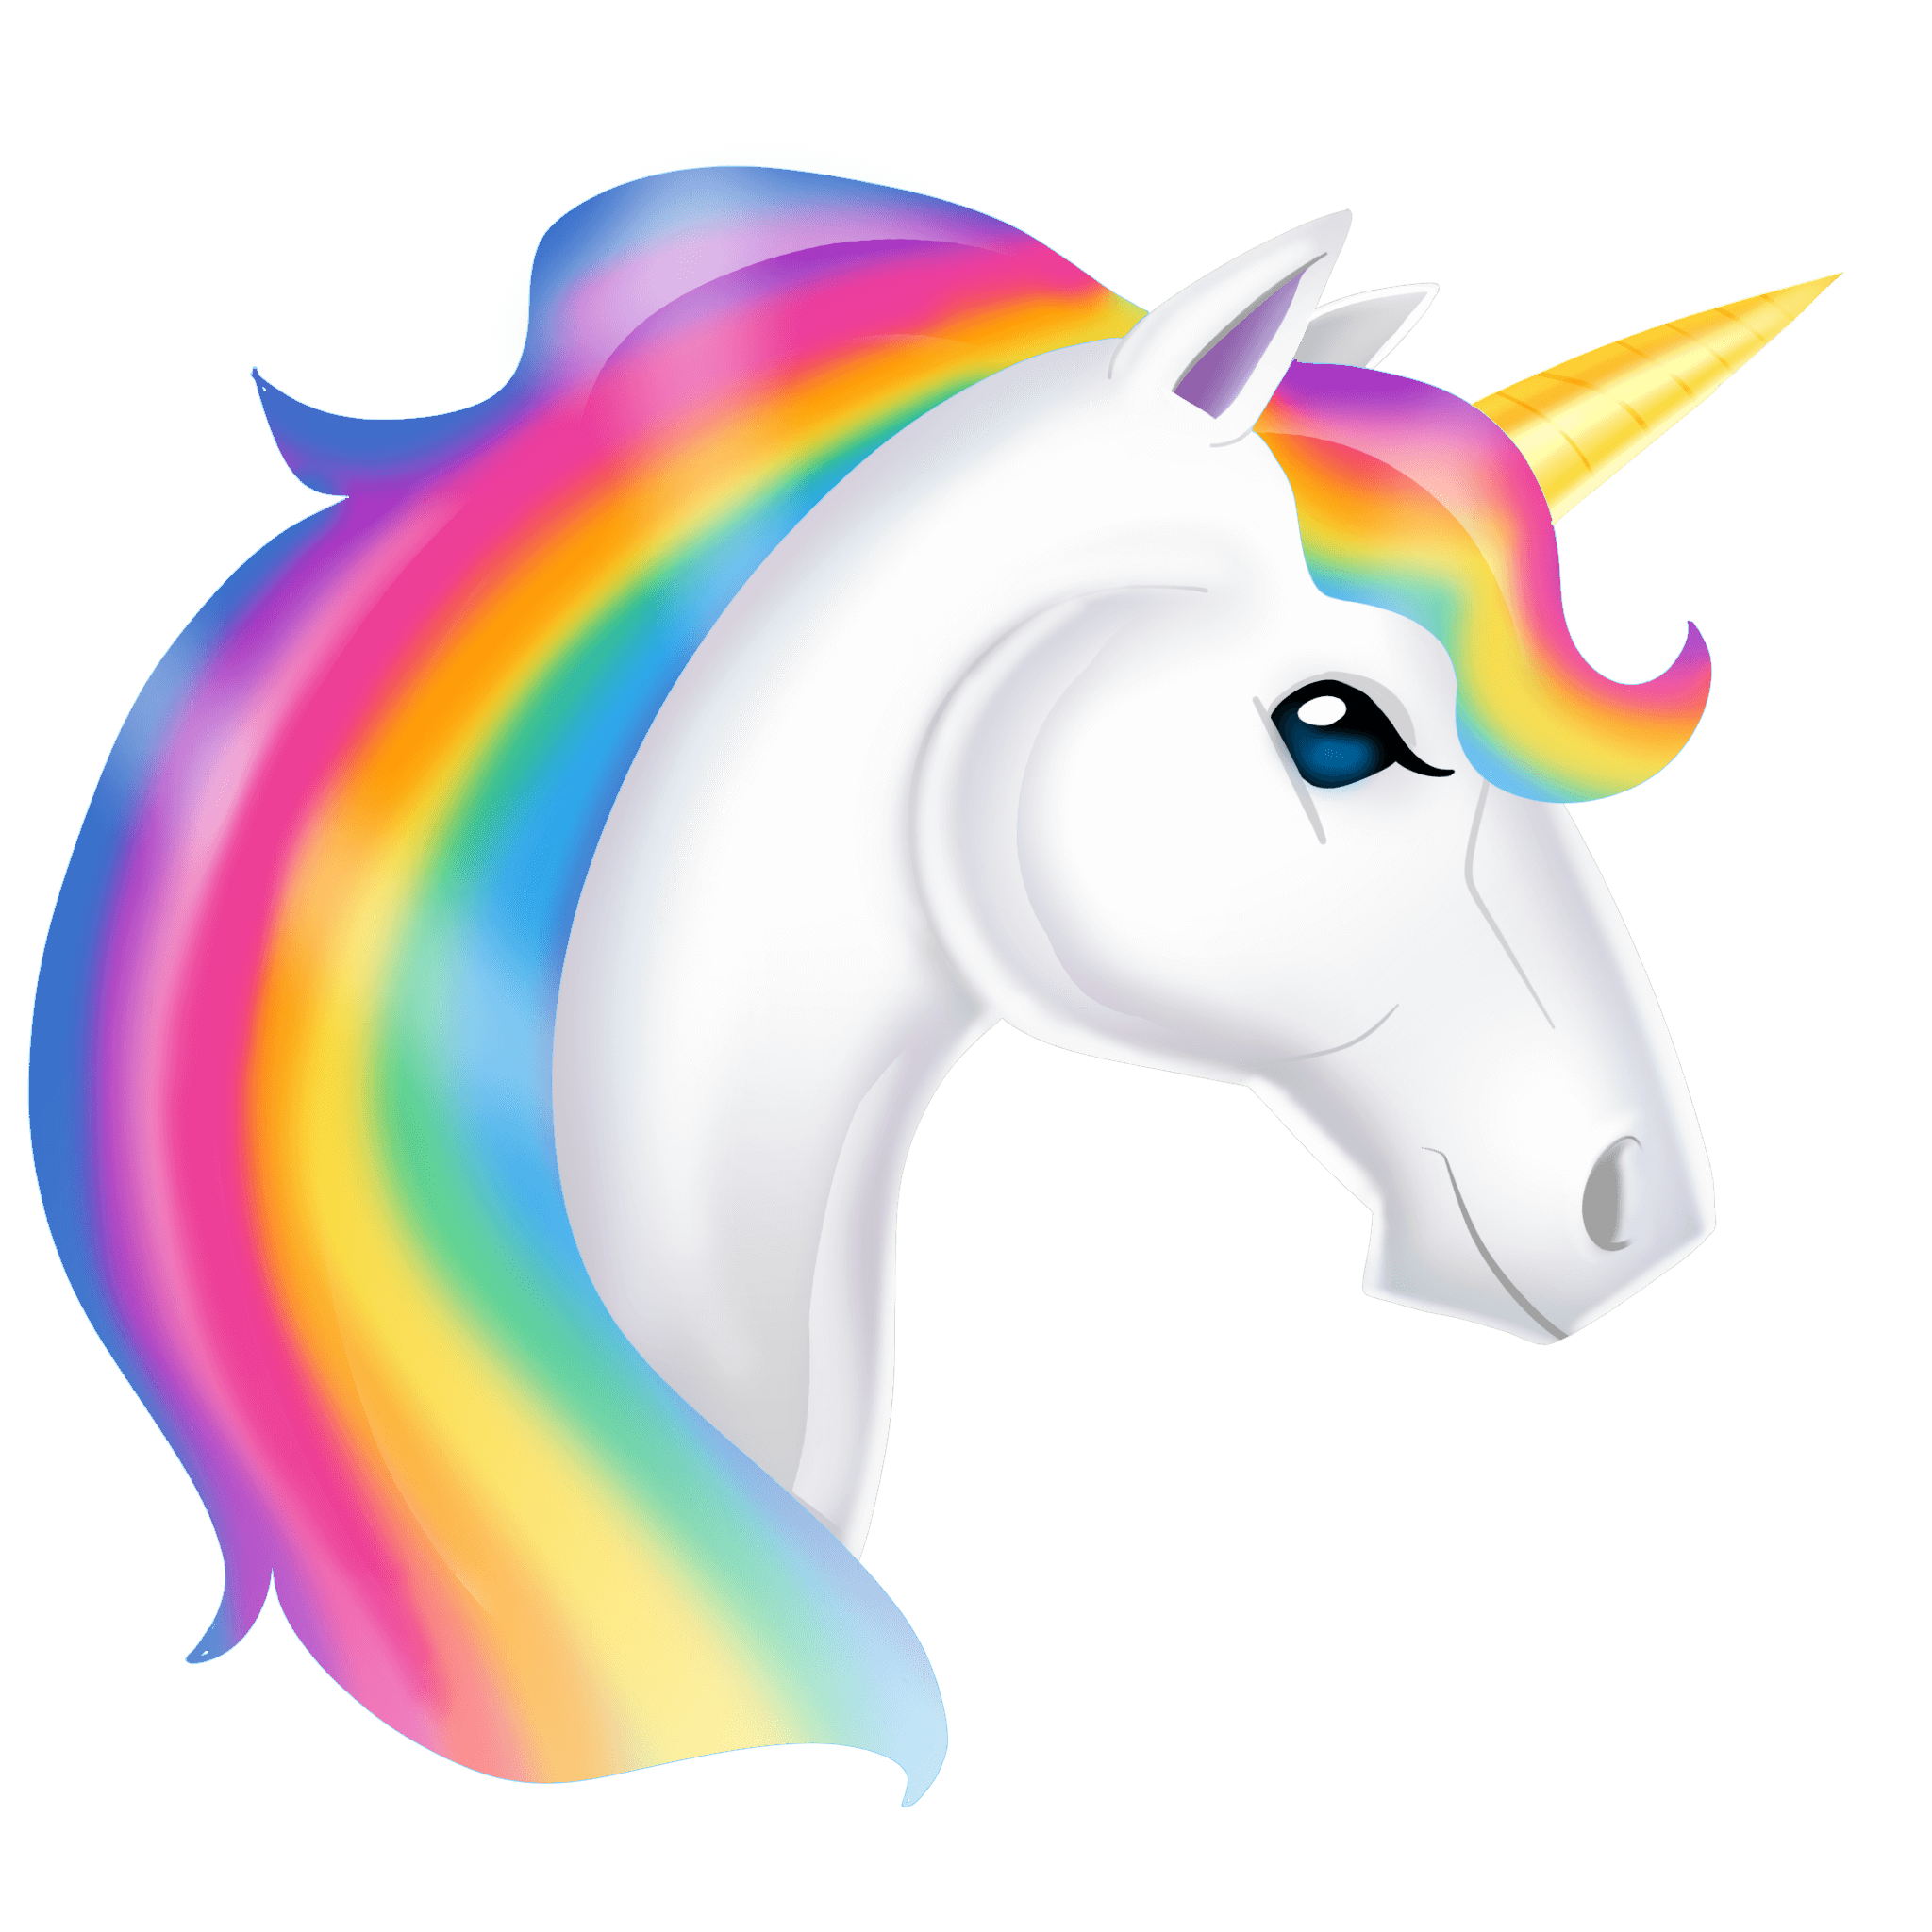 Rainbow Colors, The Horses Head, Unicorn PNG Transparent Background